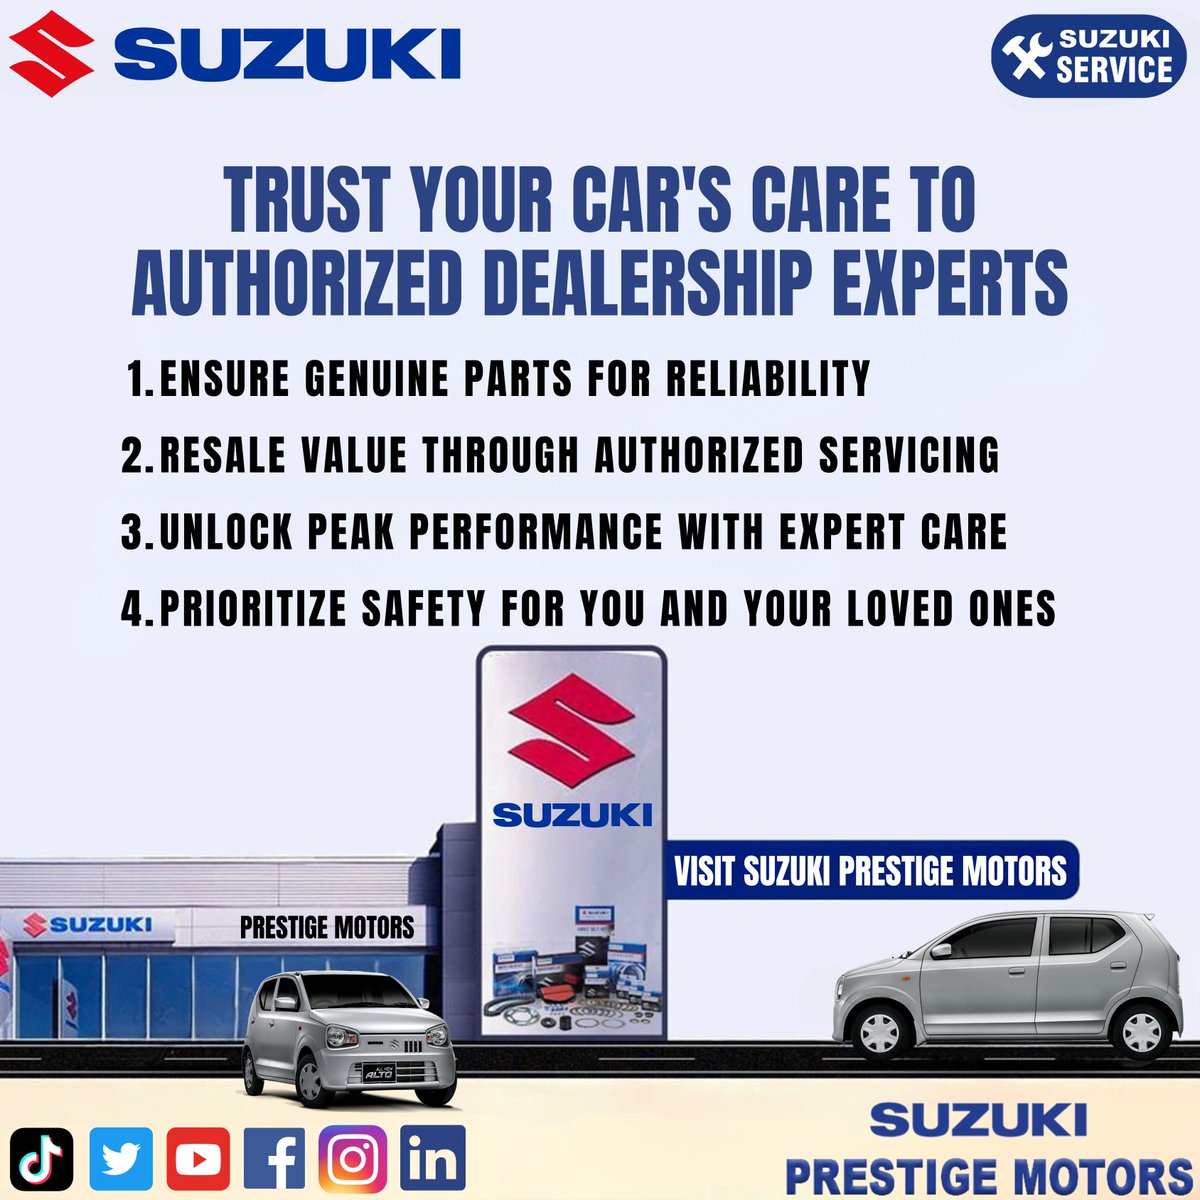 Suzuki Prestige Motors: Your Trusted Car Care Experts
#SuzukiPakistan #SuzukiService #likeforlikes #SharePost #PakSuzuki #suzuki #SuzukiPrestigeMotors #lahore #service 
#carcare #experts